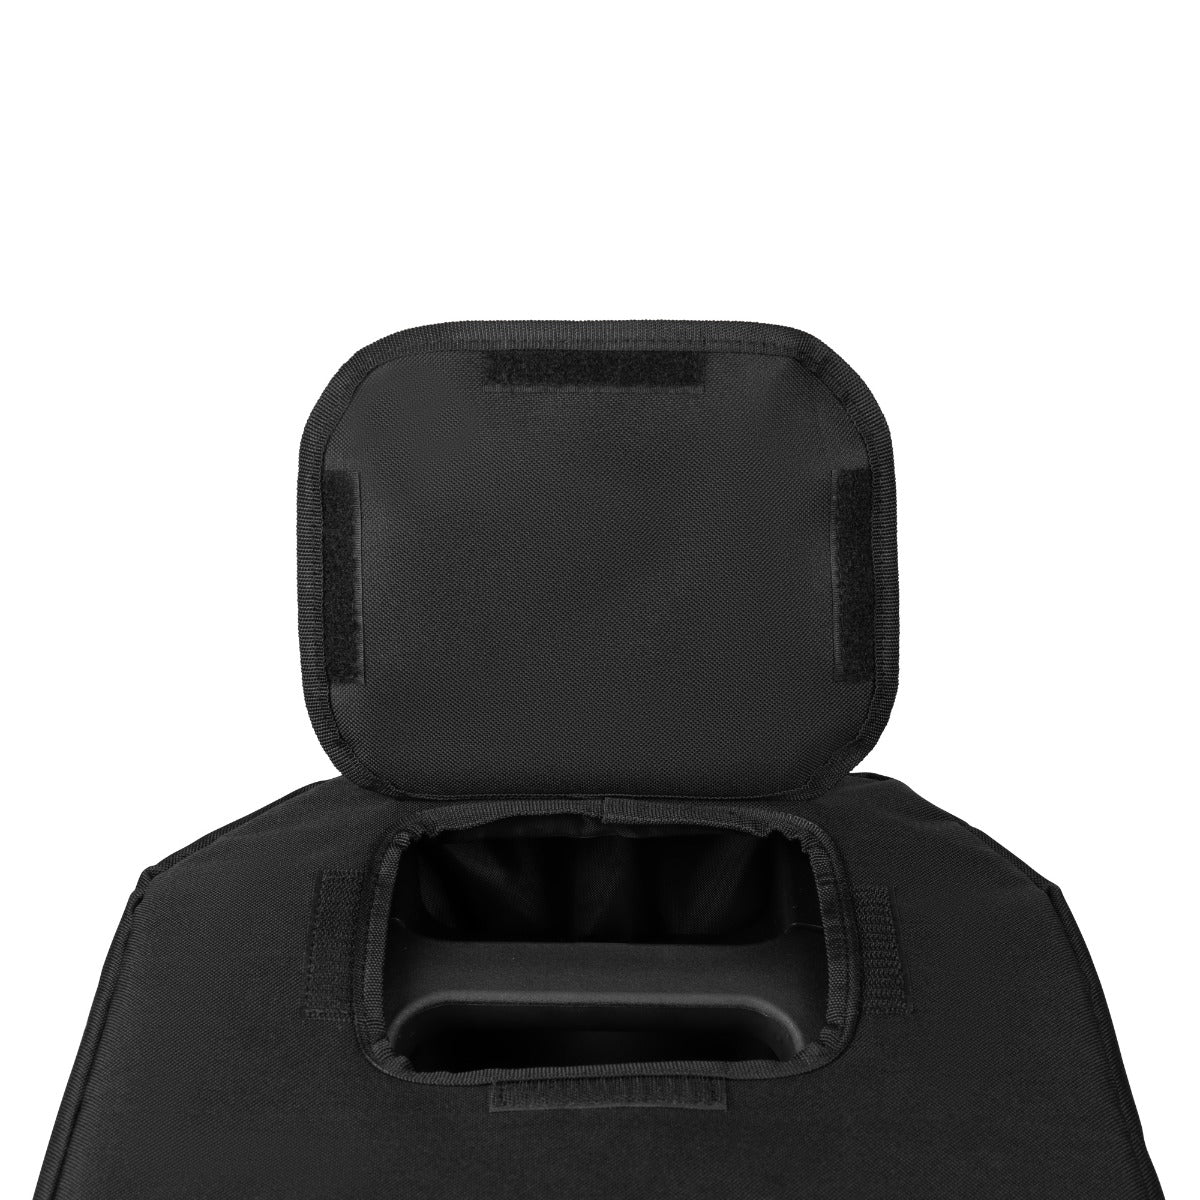 Gator Cases JBL EON710 Speaker Convertible Cover view 5